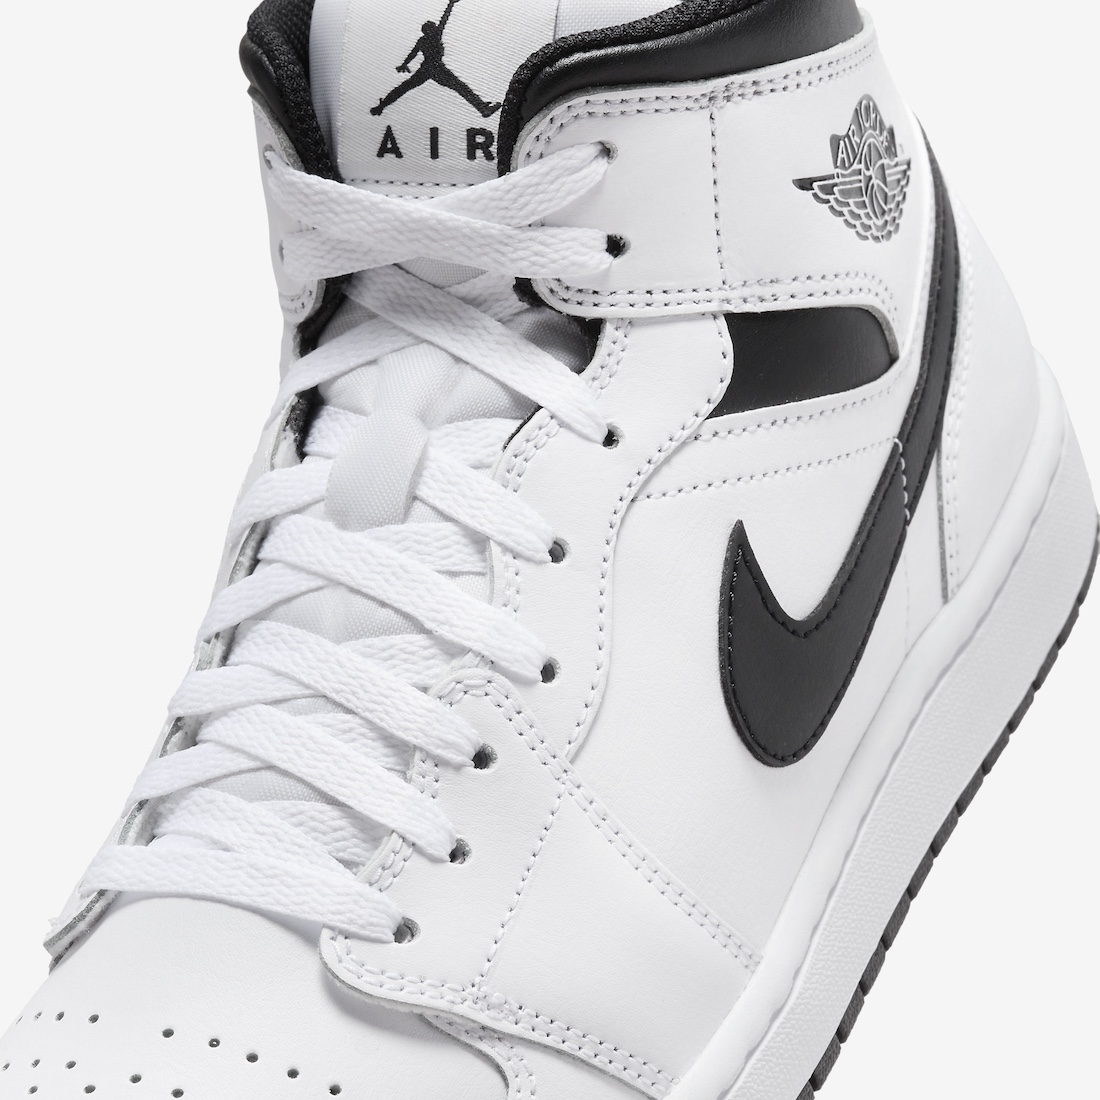 Sneaker Bar Detroit on X: Off-White x Nike Air Force 1 Mid “Black” on-feet  👁‍🗨   / X